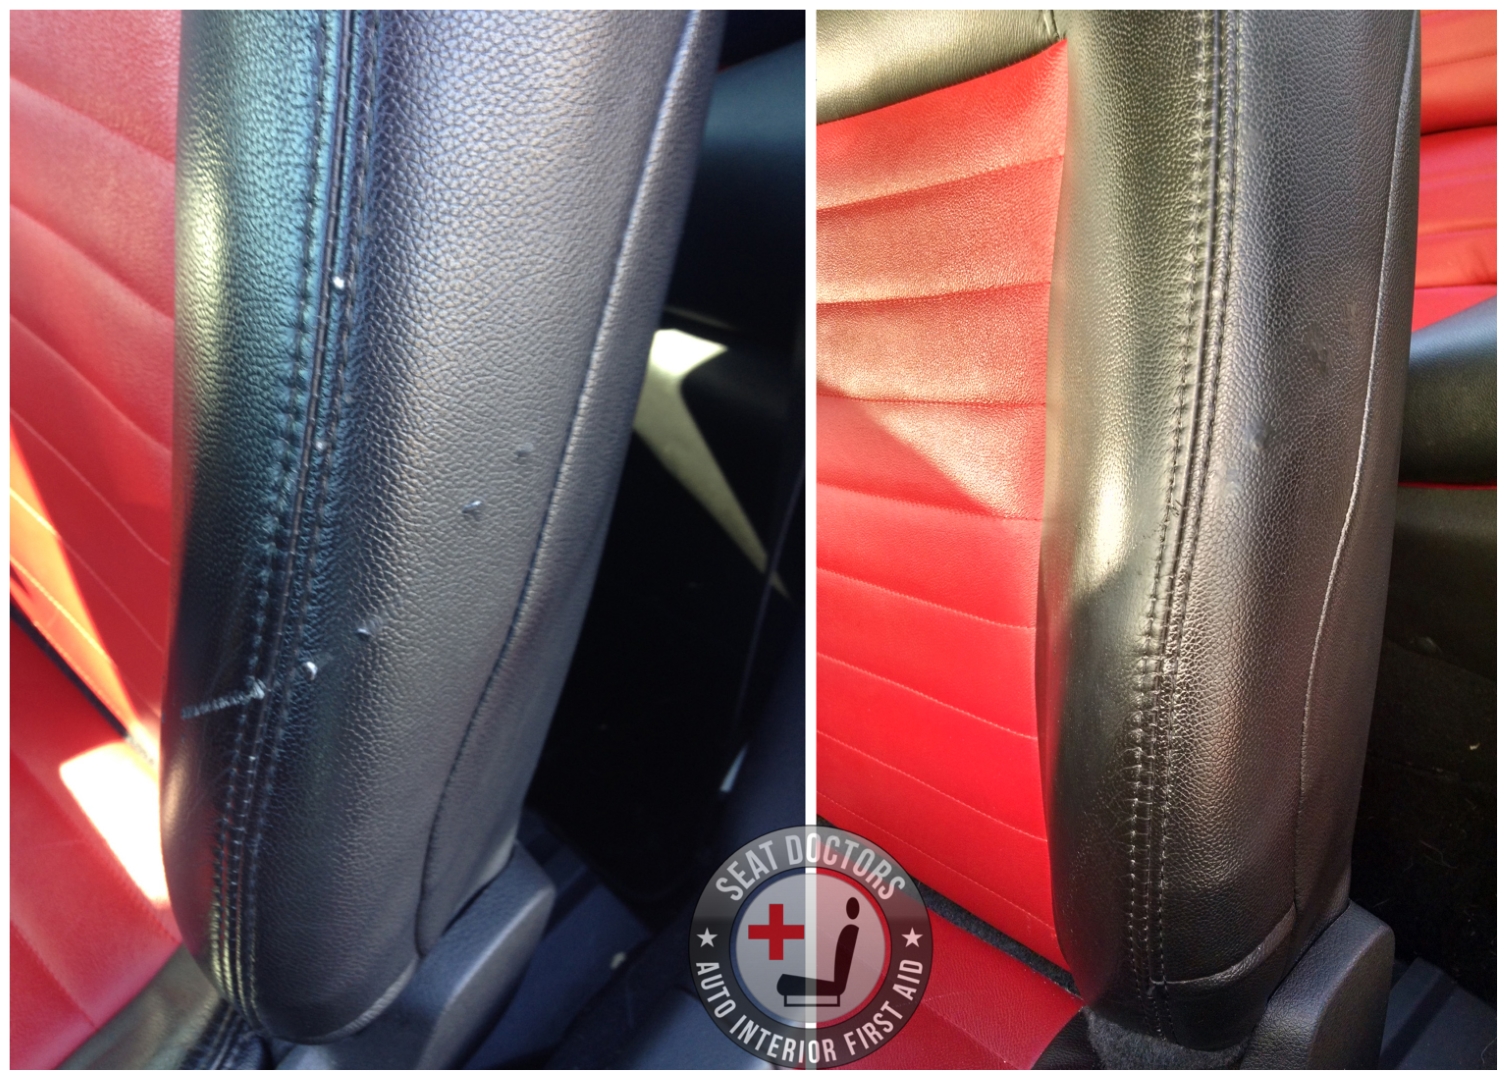 vinyl repair — Before & After — Seat Doctors